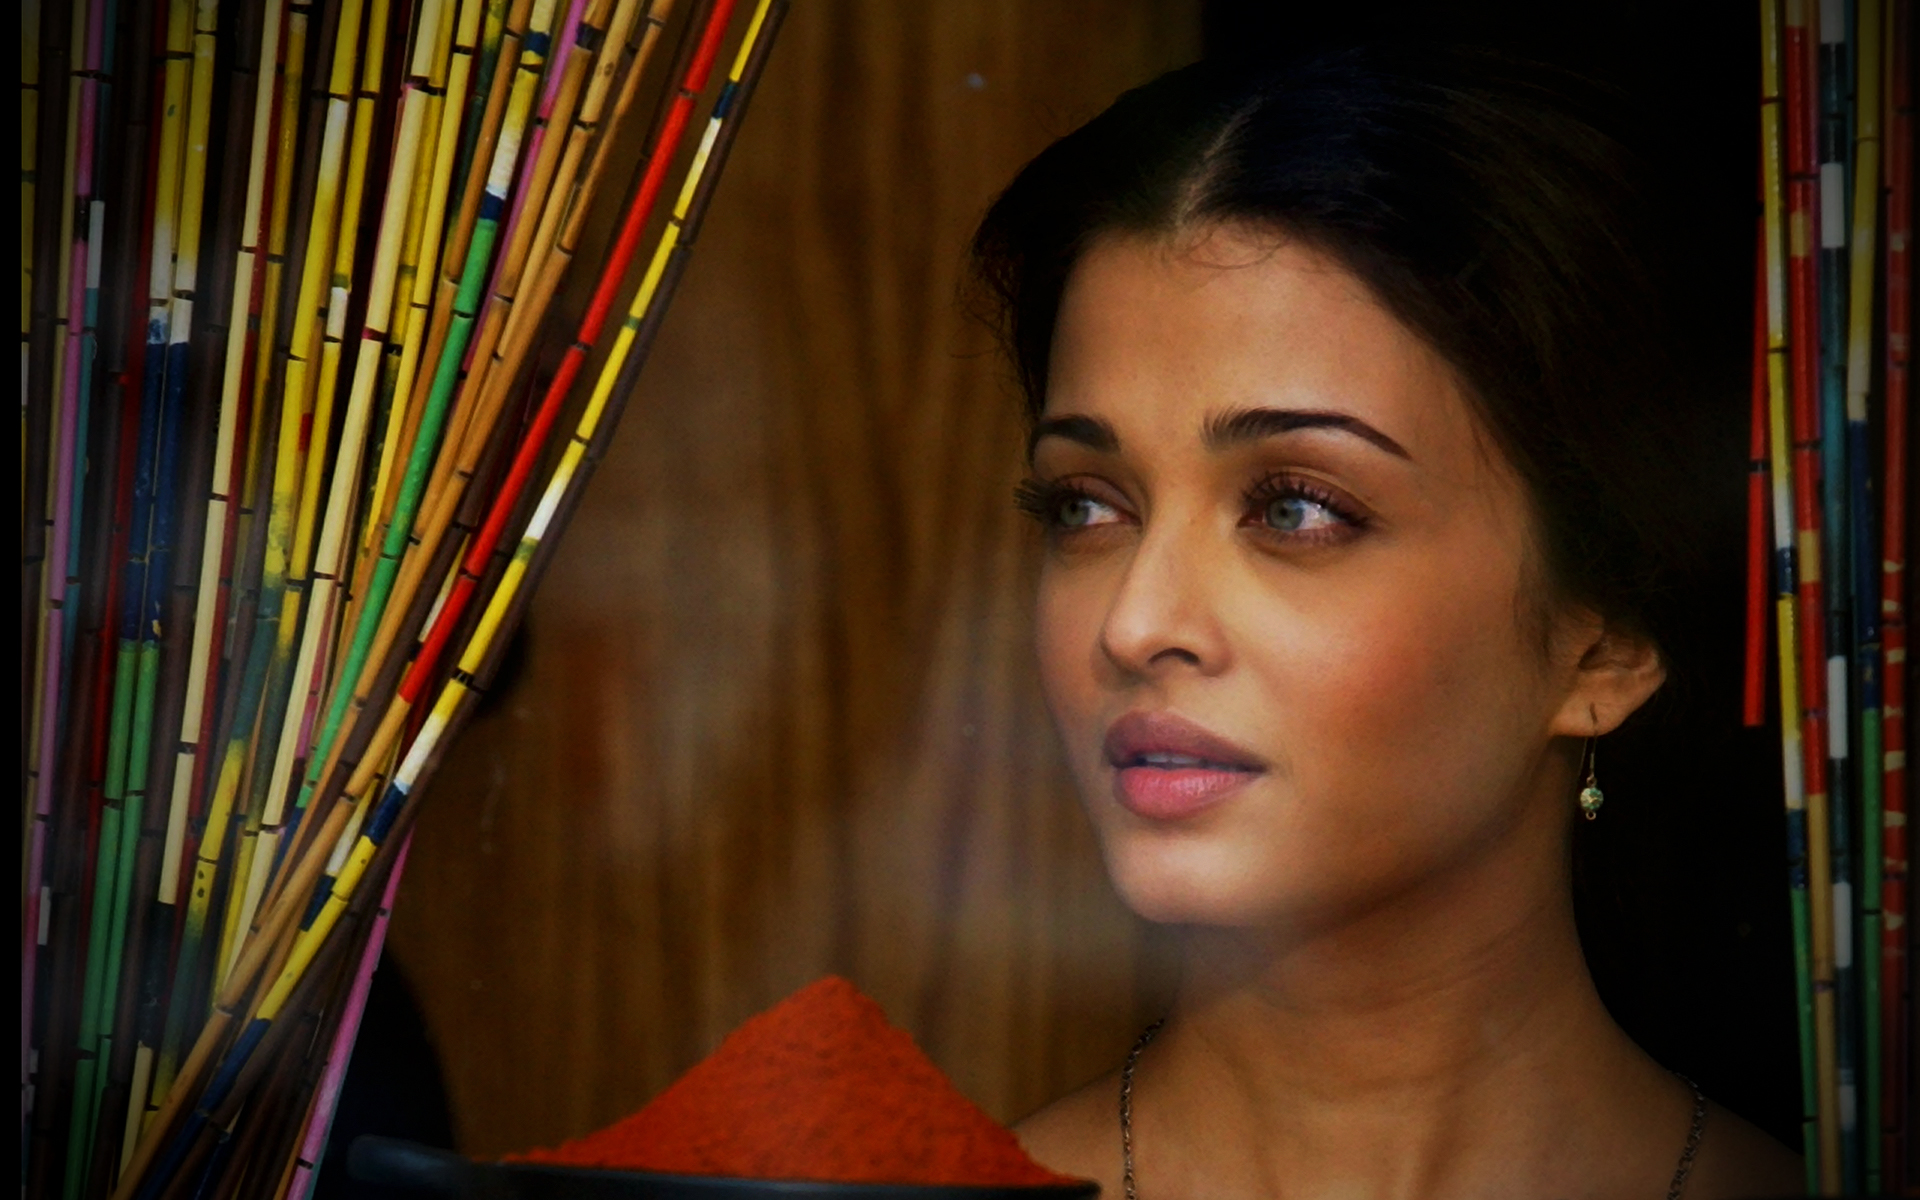 Celebrity Aishwarya Rai HD Wallpaper | Background Image